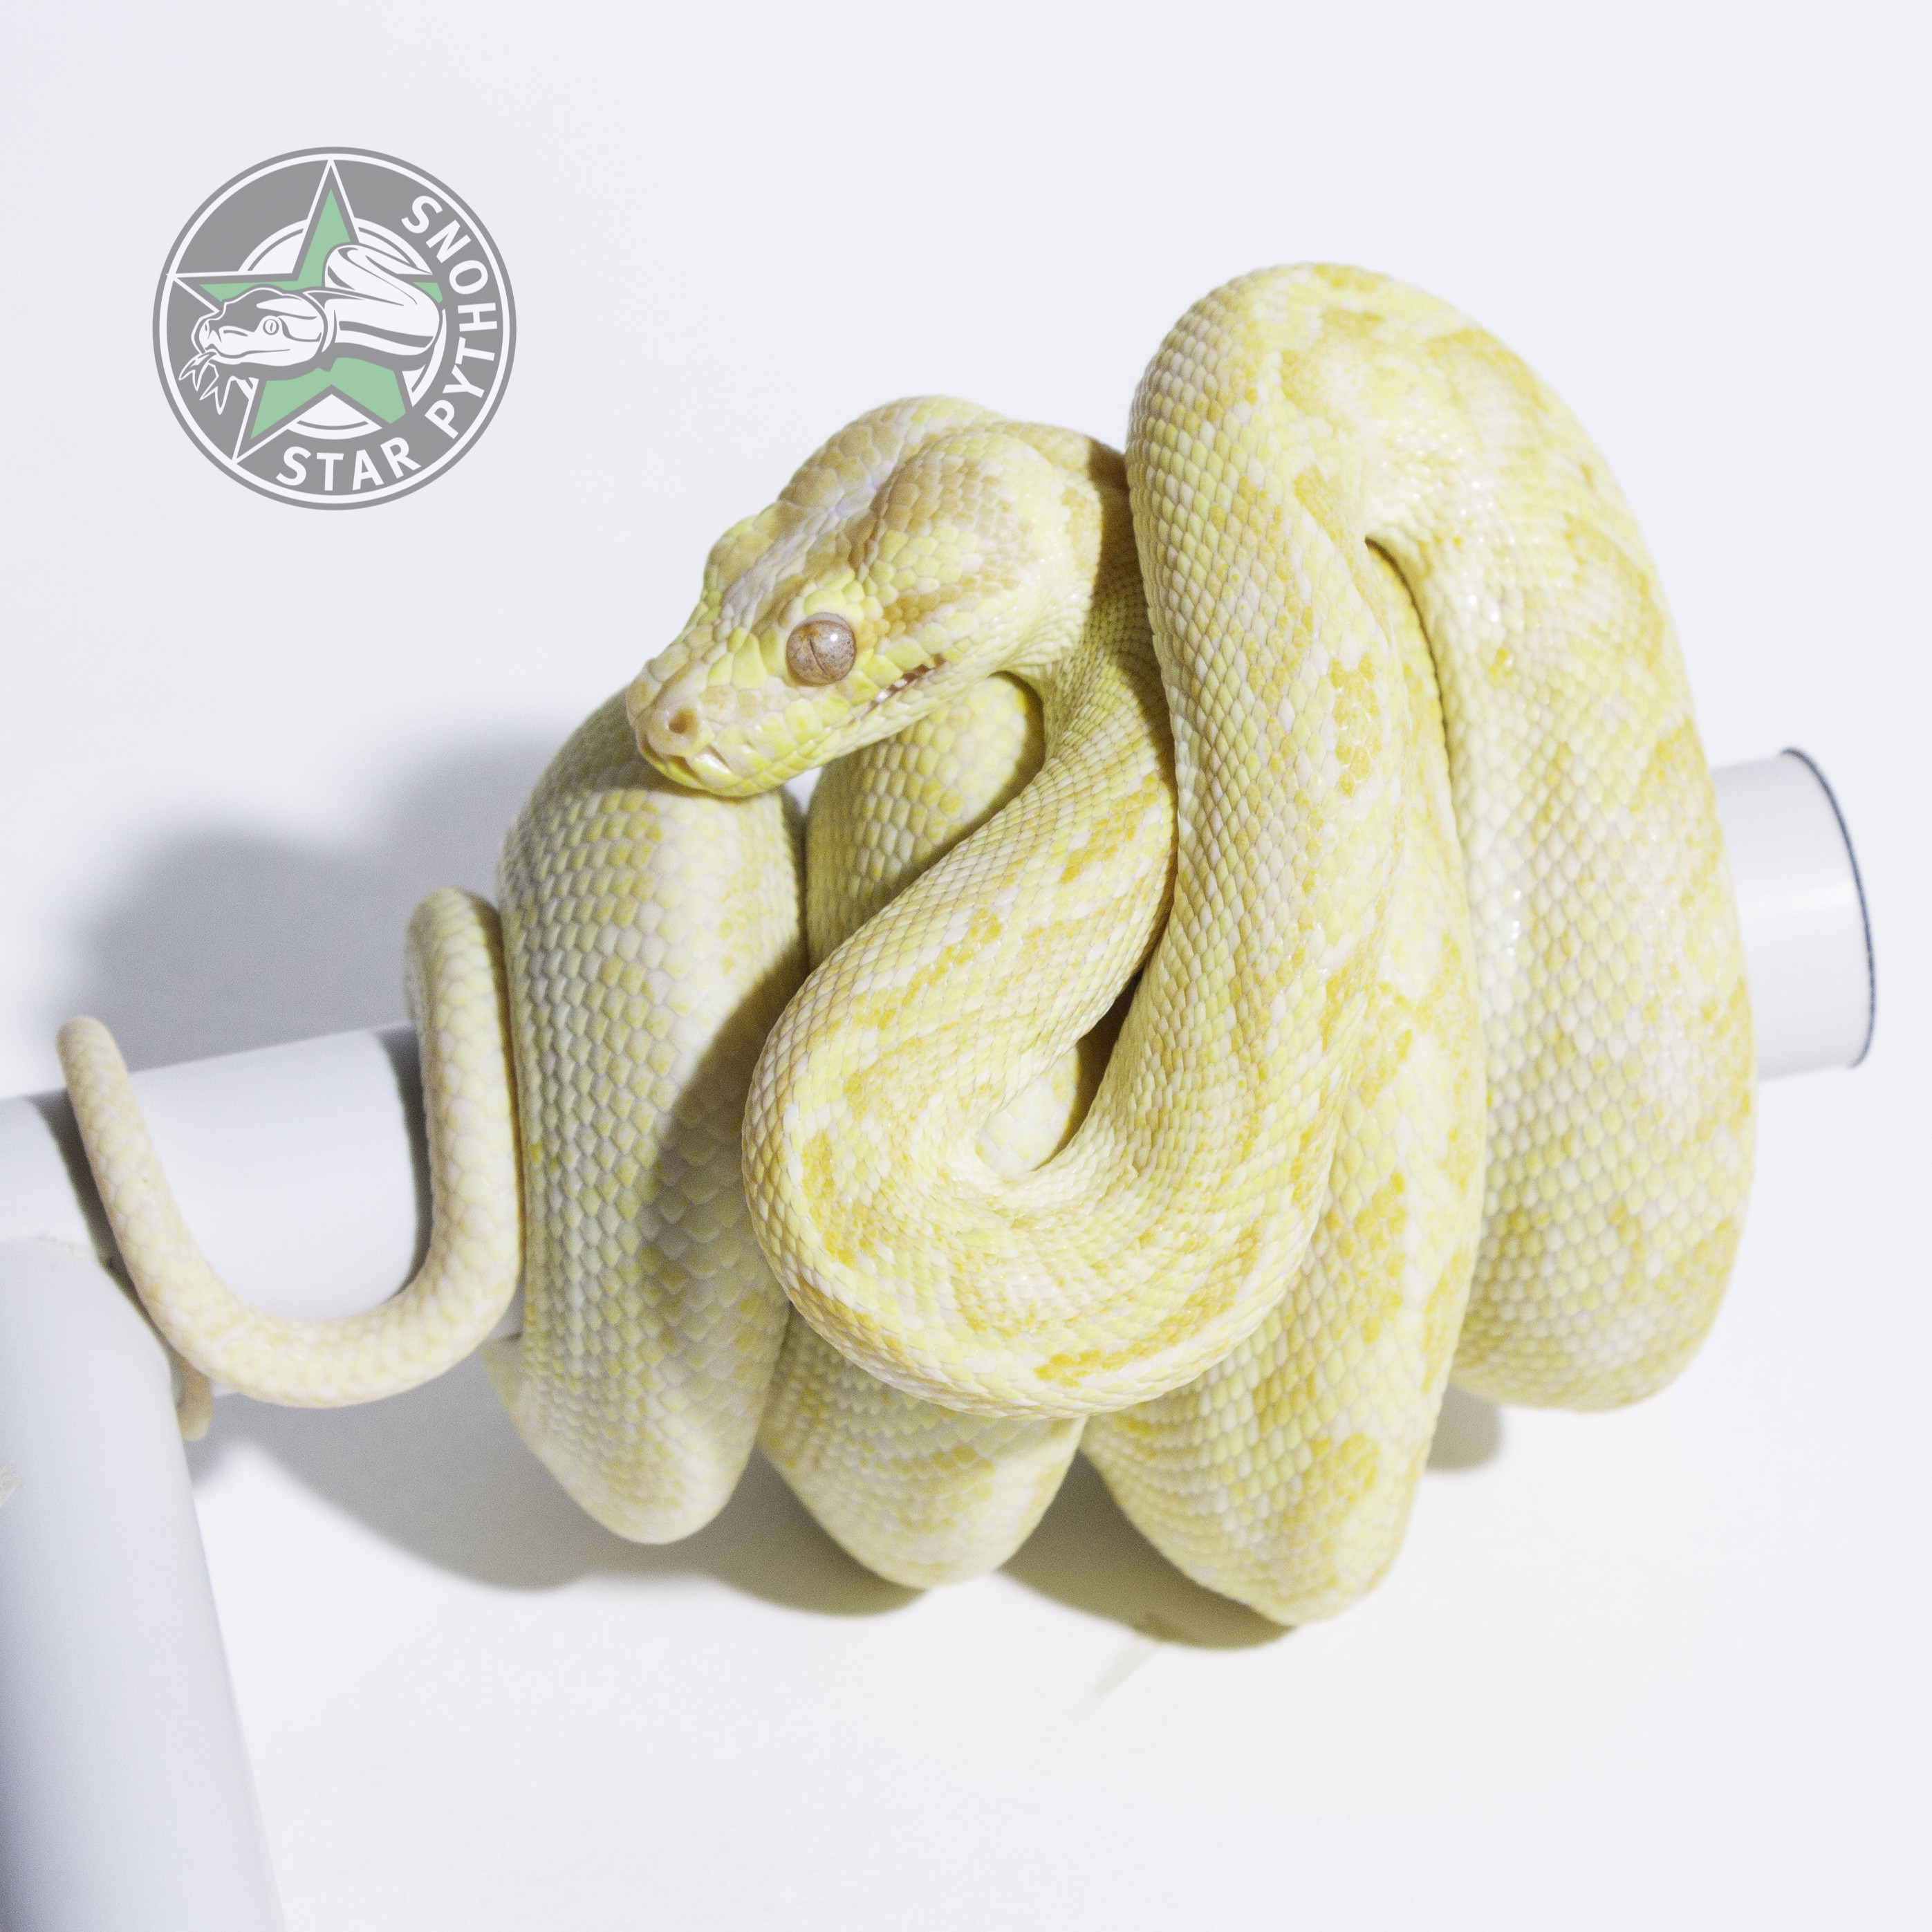 Albino Other Carpet Python by StarPythons Inc.